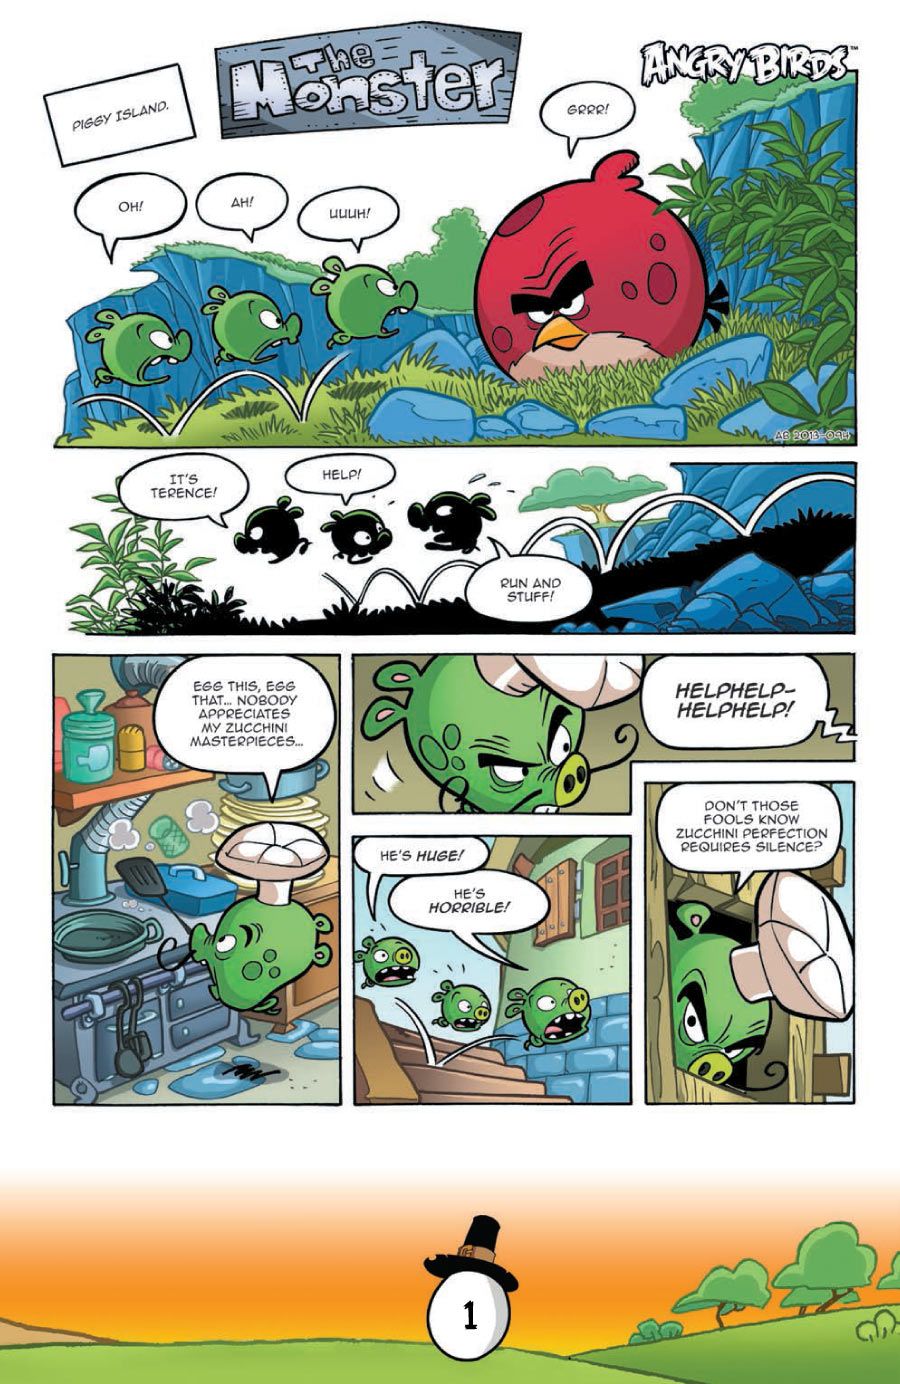 angrybirds_comics_11-pr-3